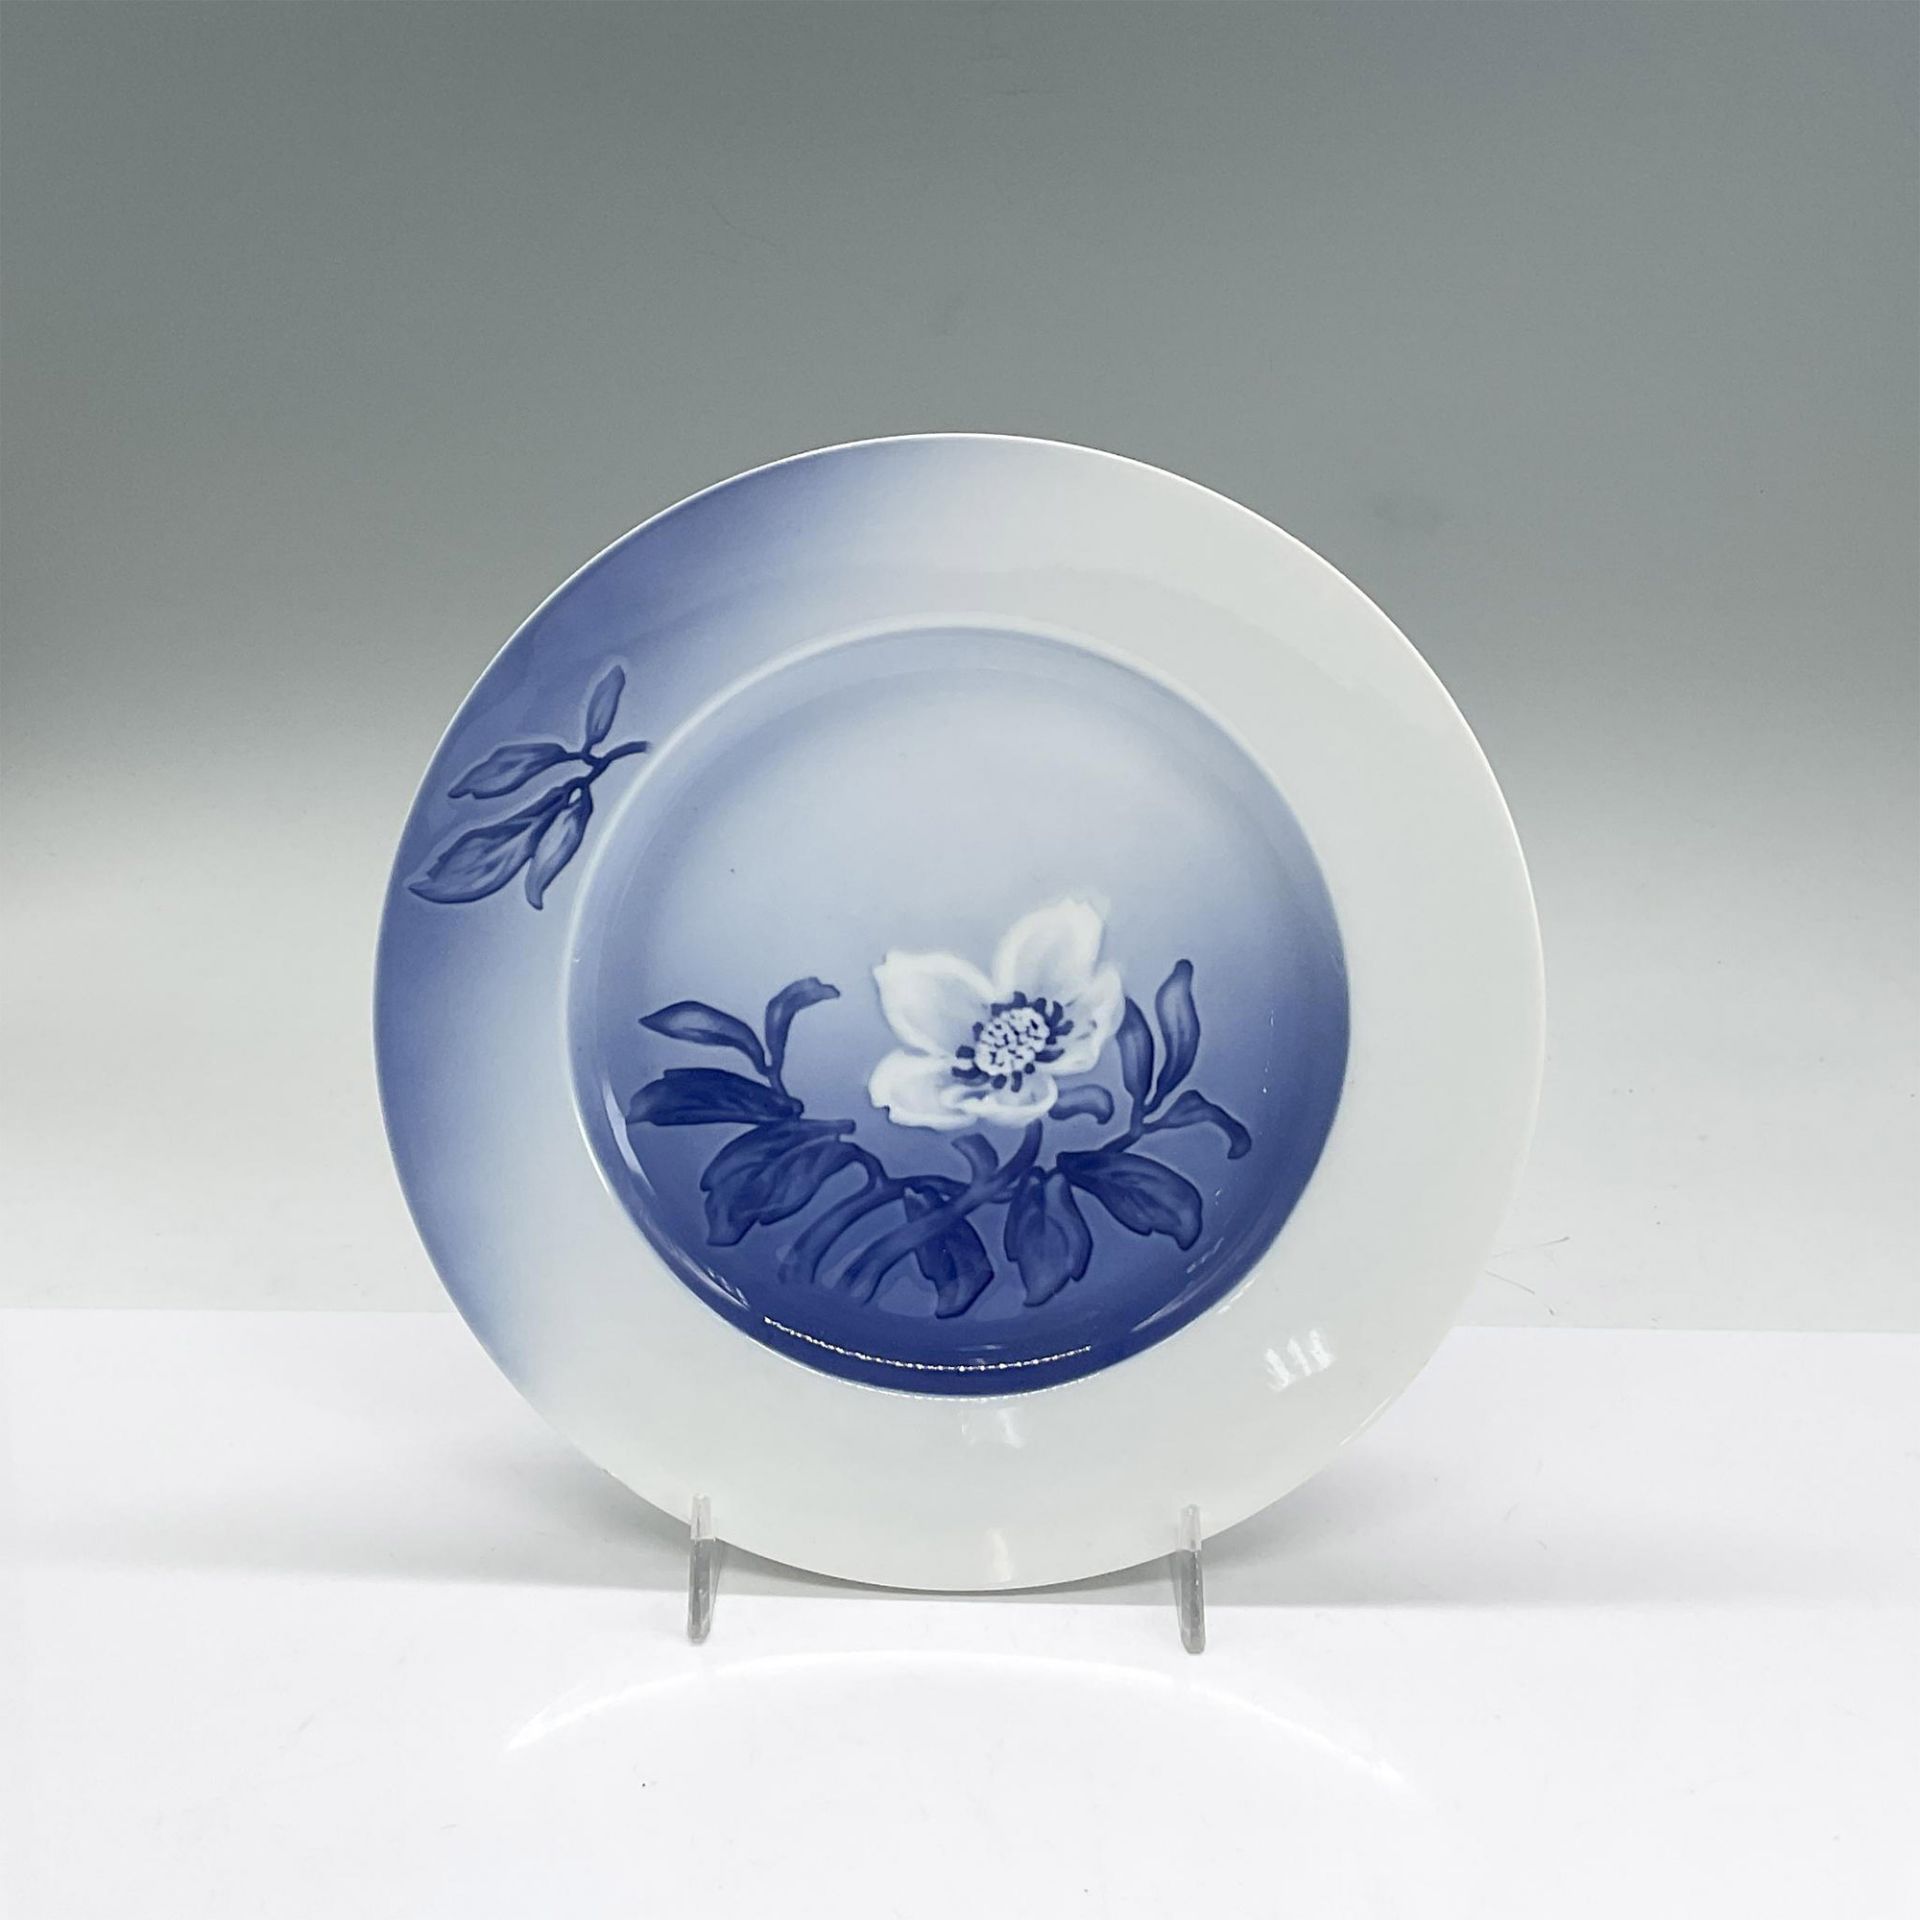 4pc Bing & Grondahl Porcelain Dishes, Christmas Rose - Image 4 of 7